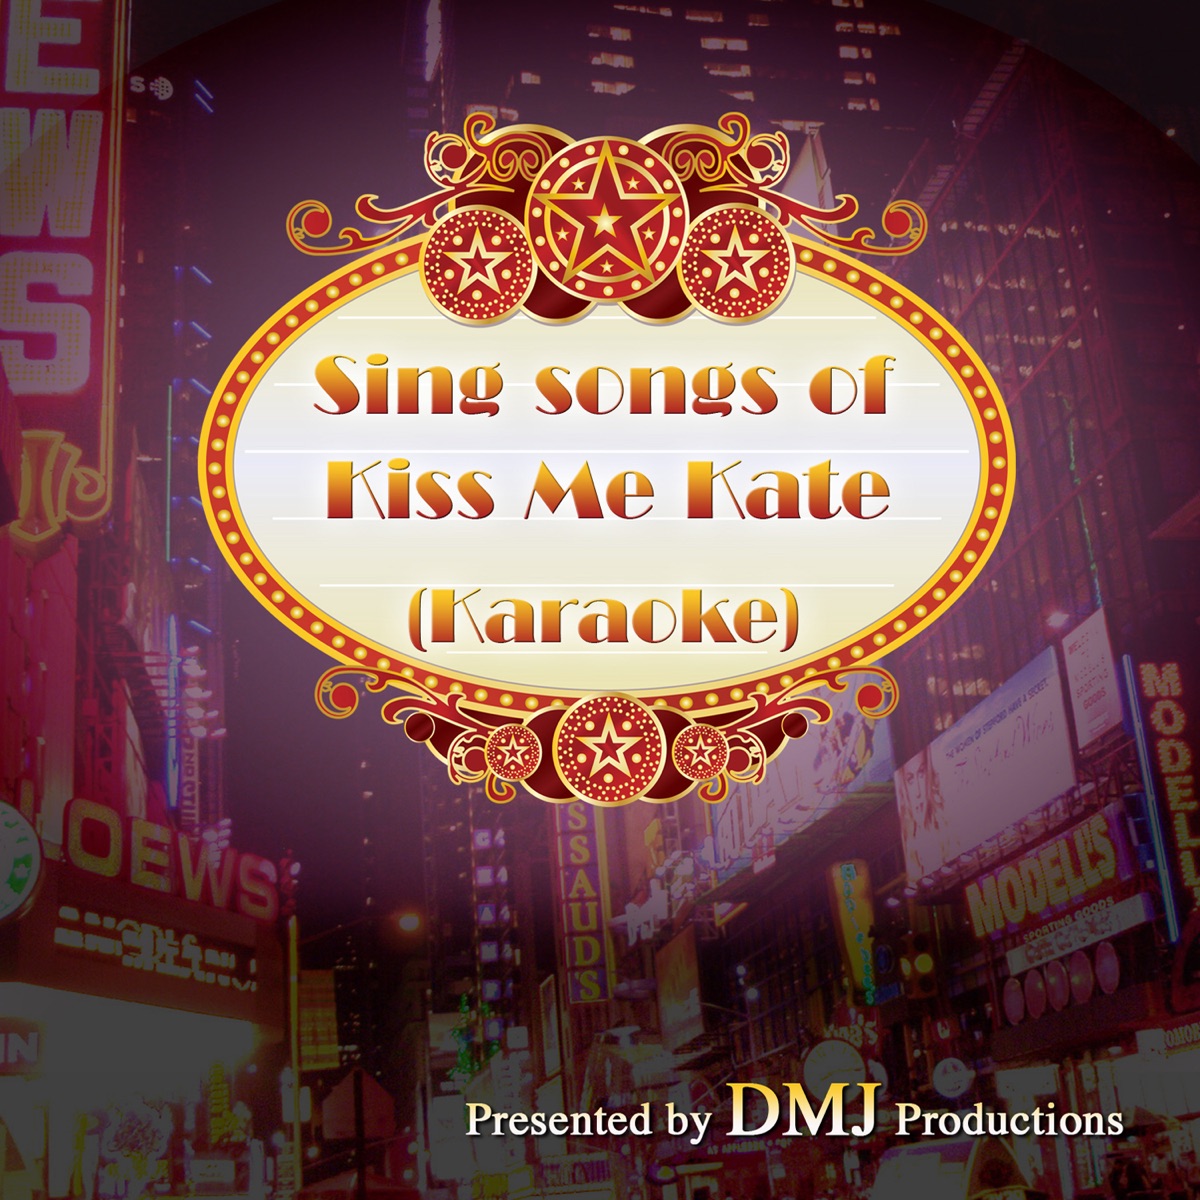 Sing songs of Kiss Me Kate (Karaoke) - EP - Album by DMJ Productions -  Apple Music